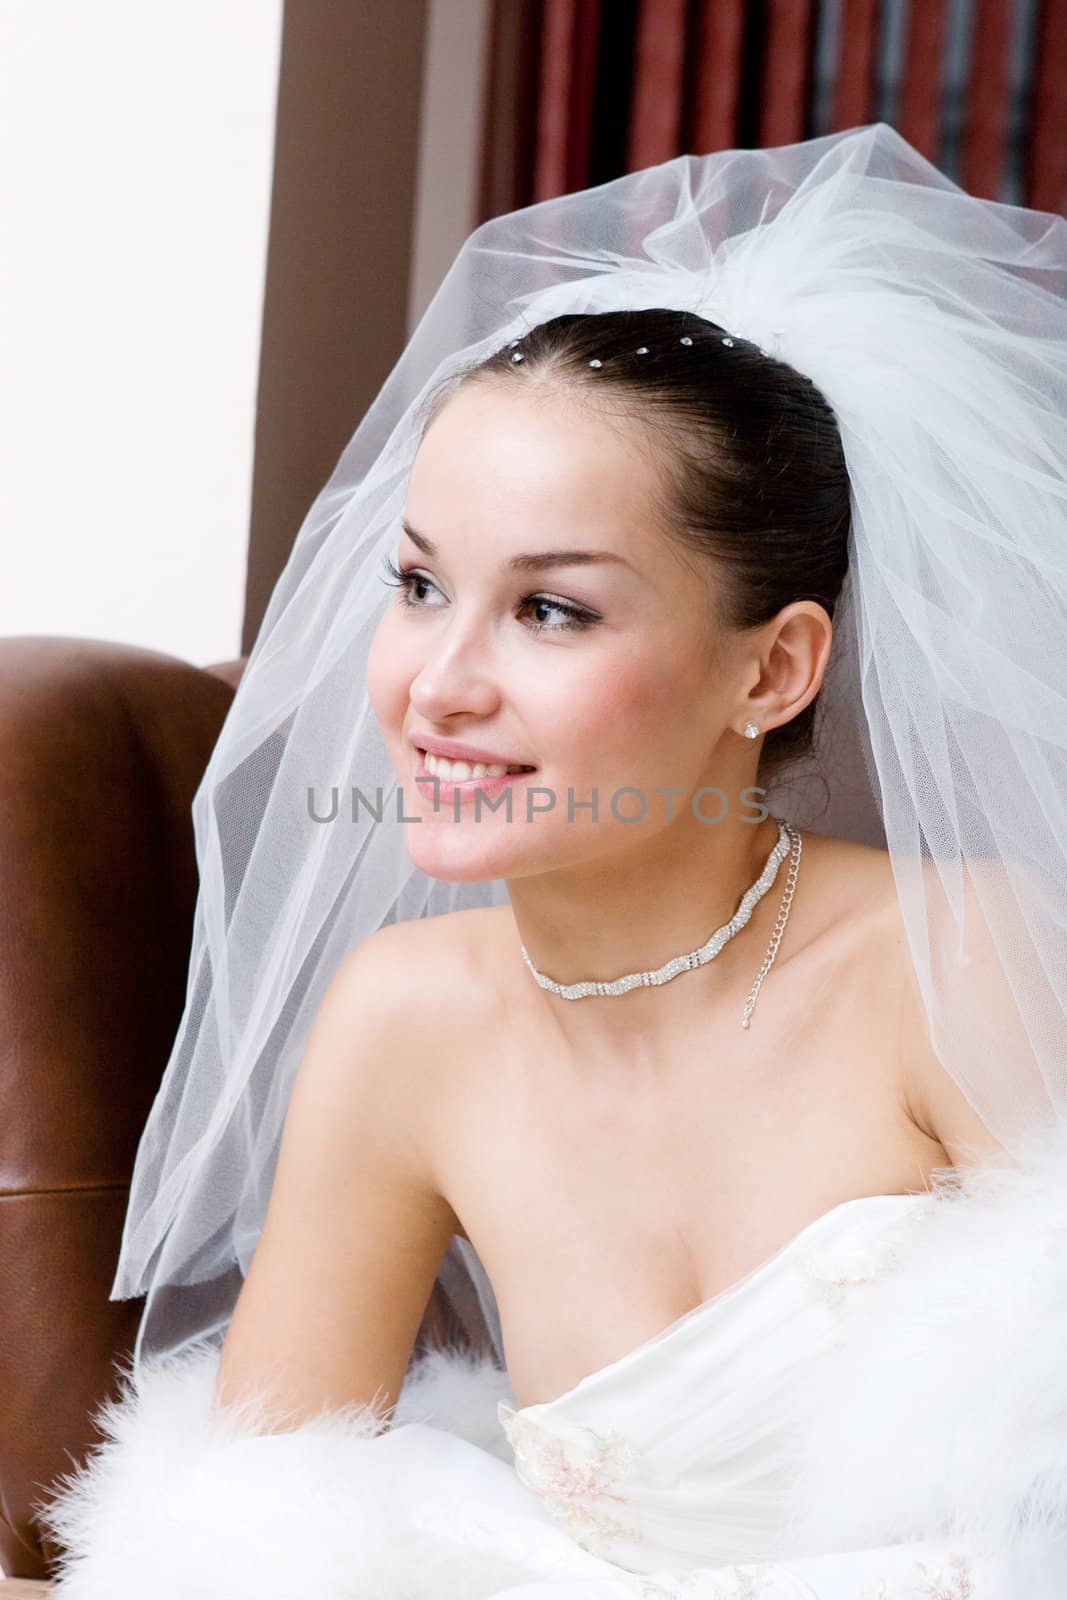 a young bride looking forward by vsurkov